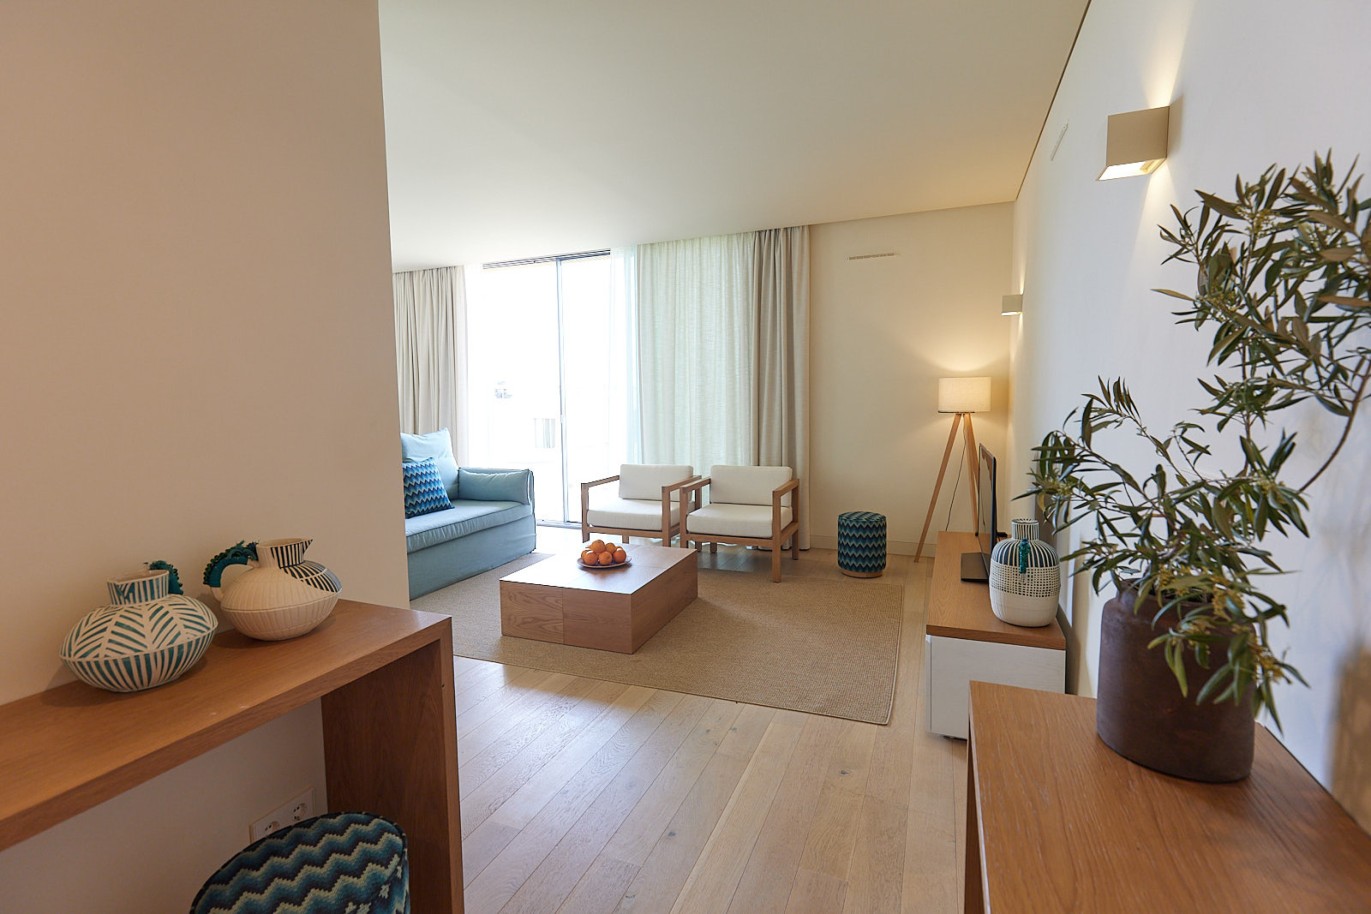 2 bedroom apartment in resort, for sale in Porches, Algarve_230681